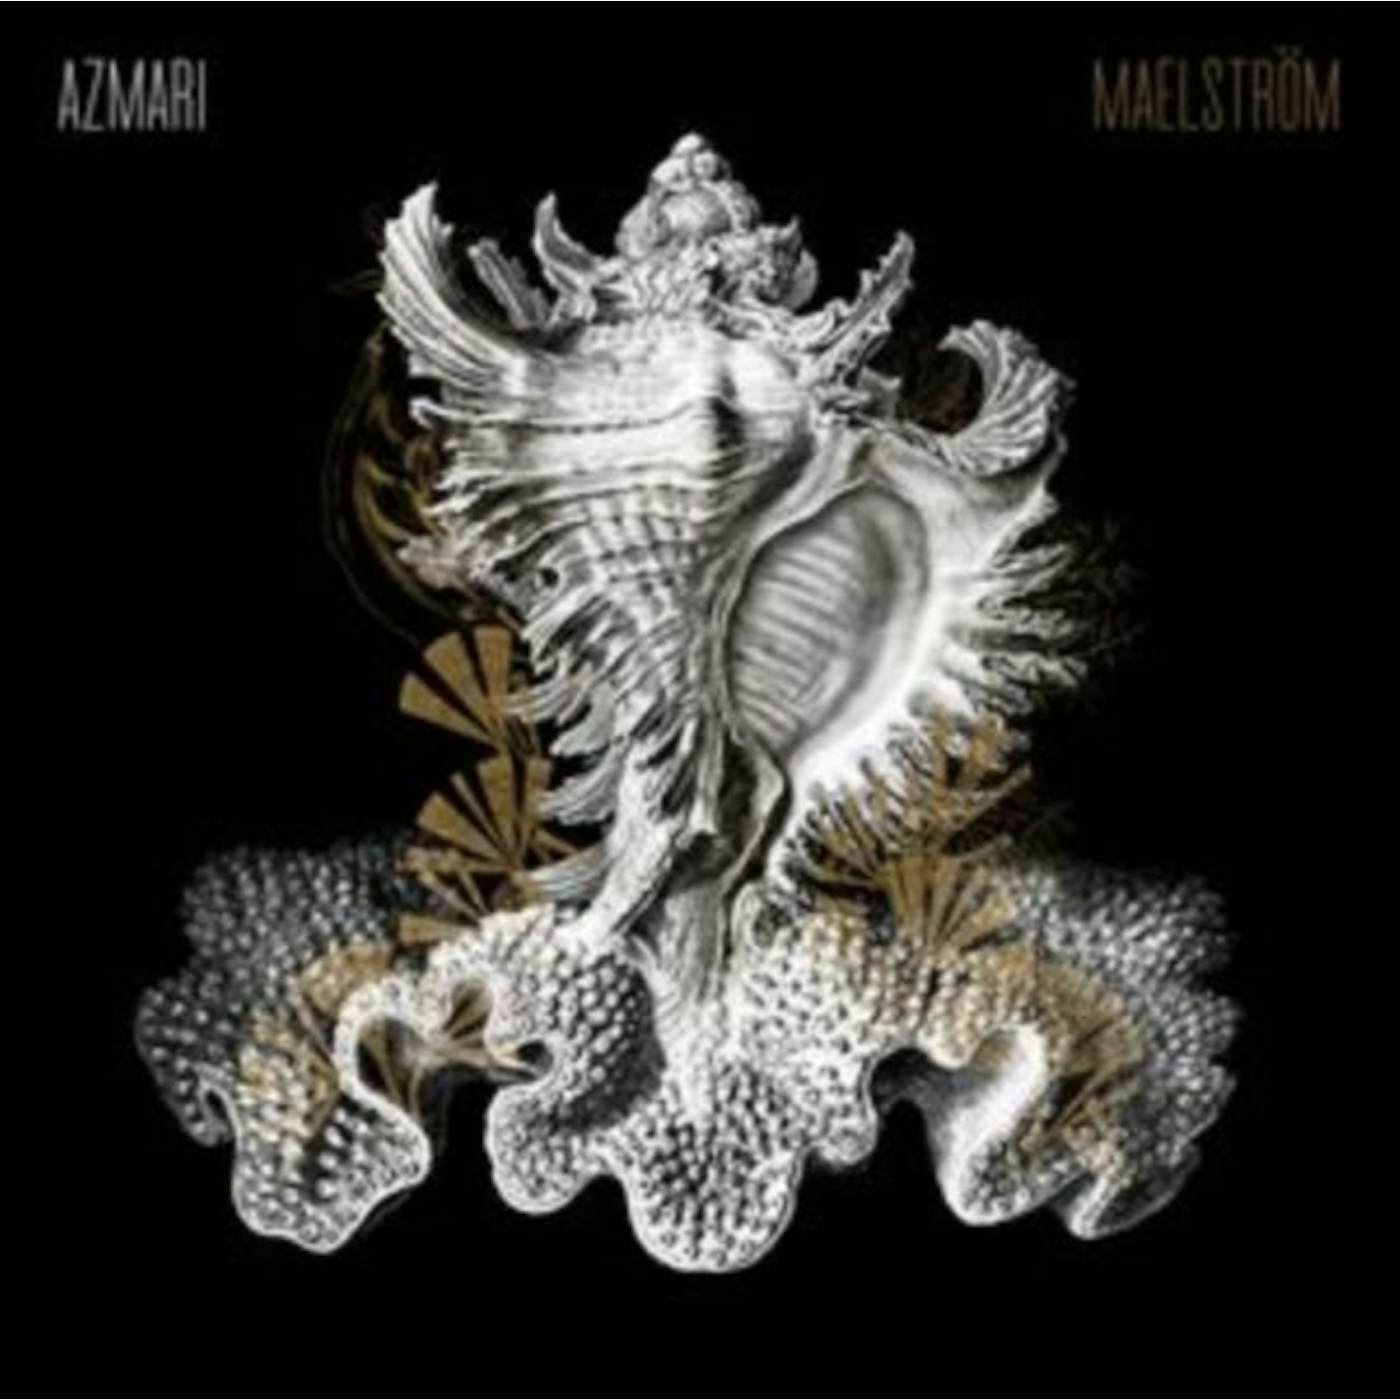 Azmari LP - Maelstrom (Vinyl)